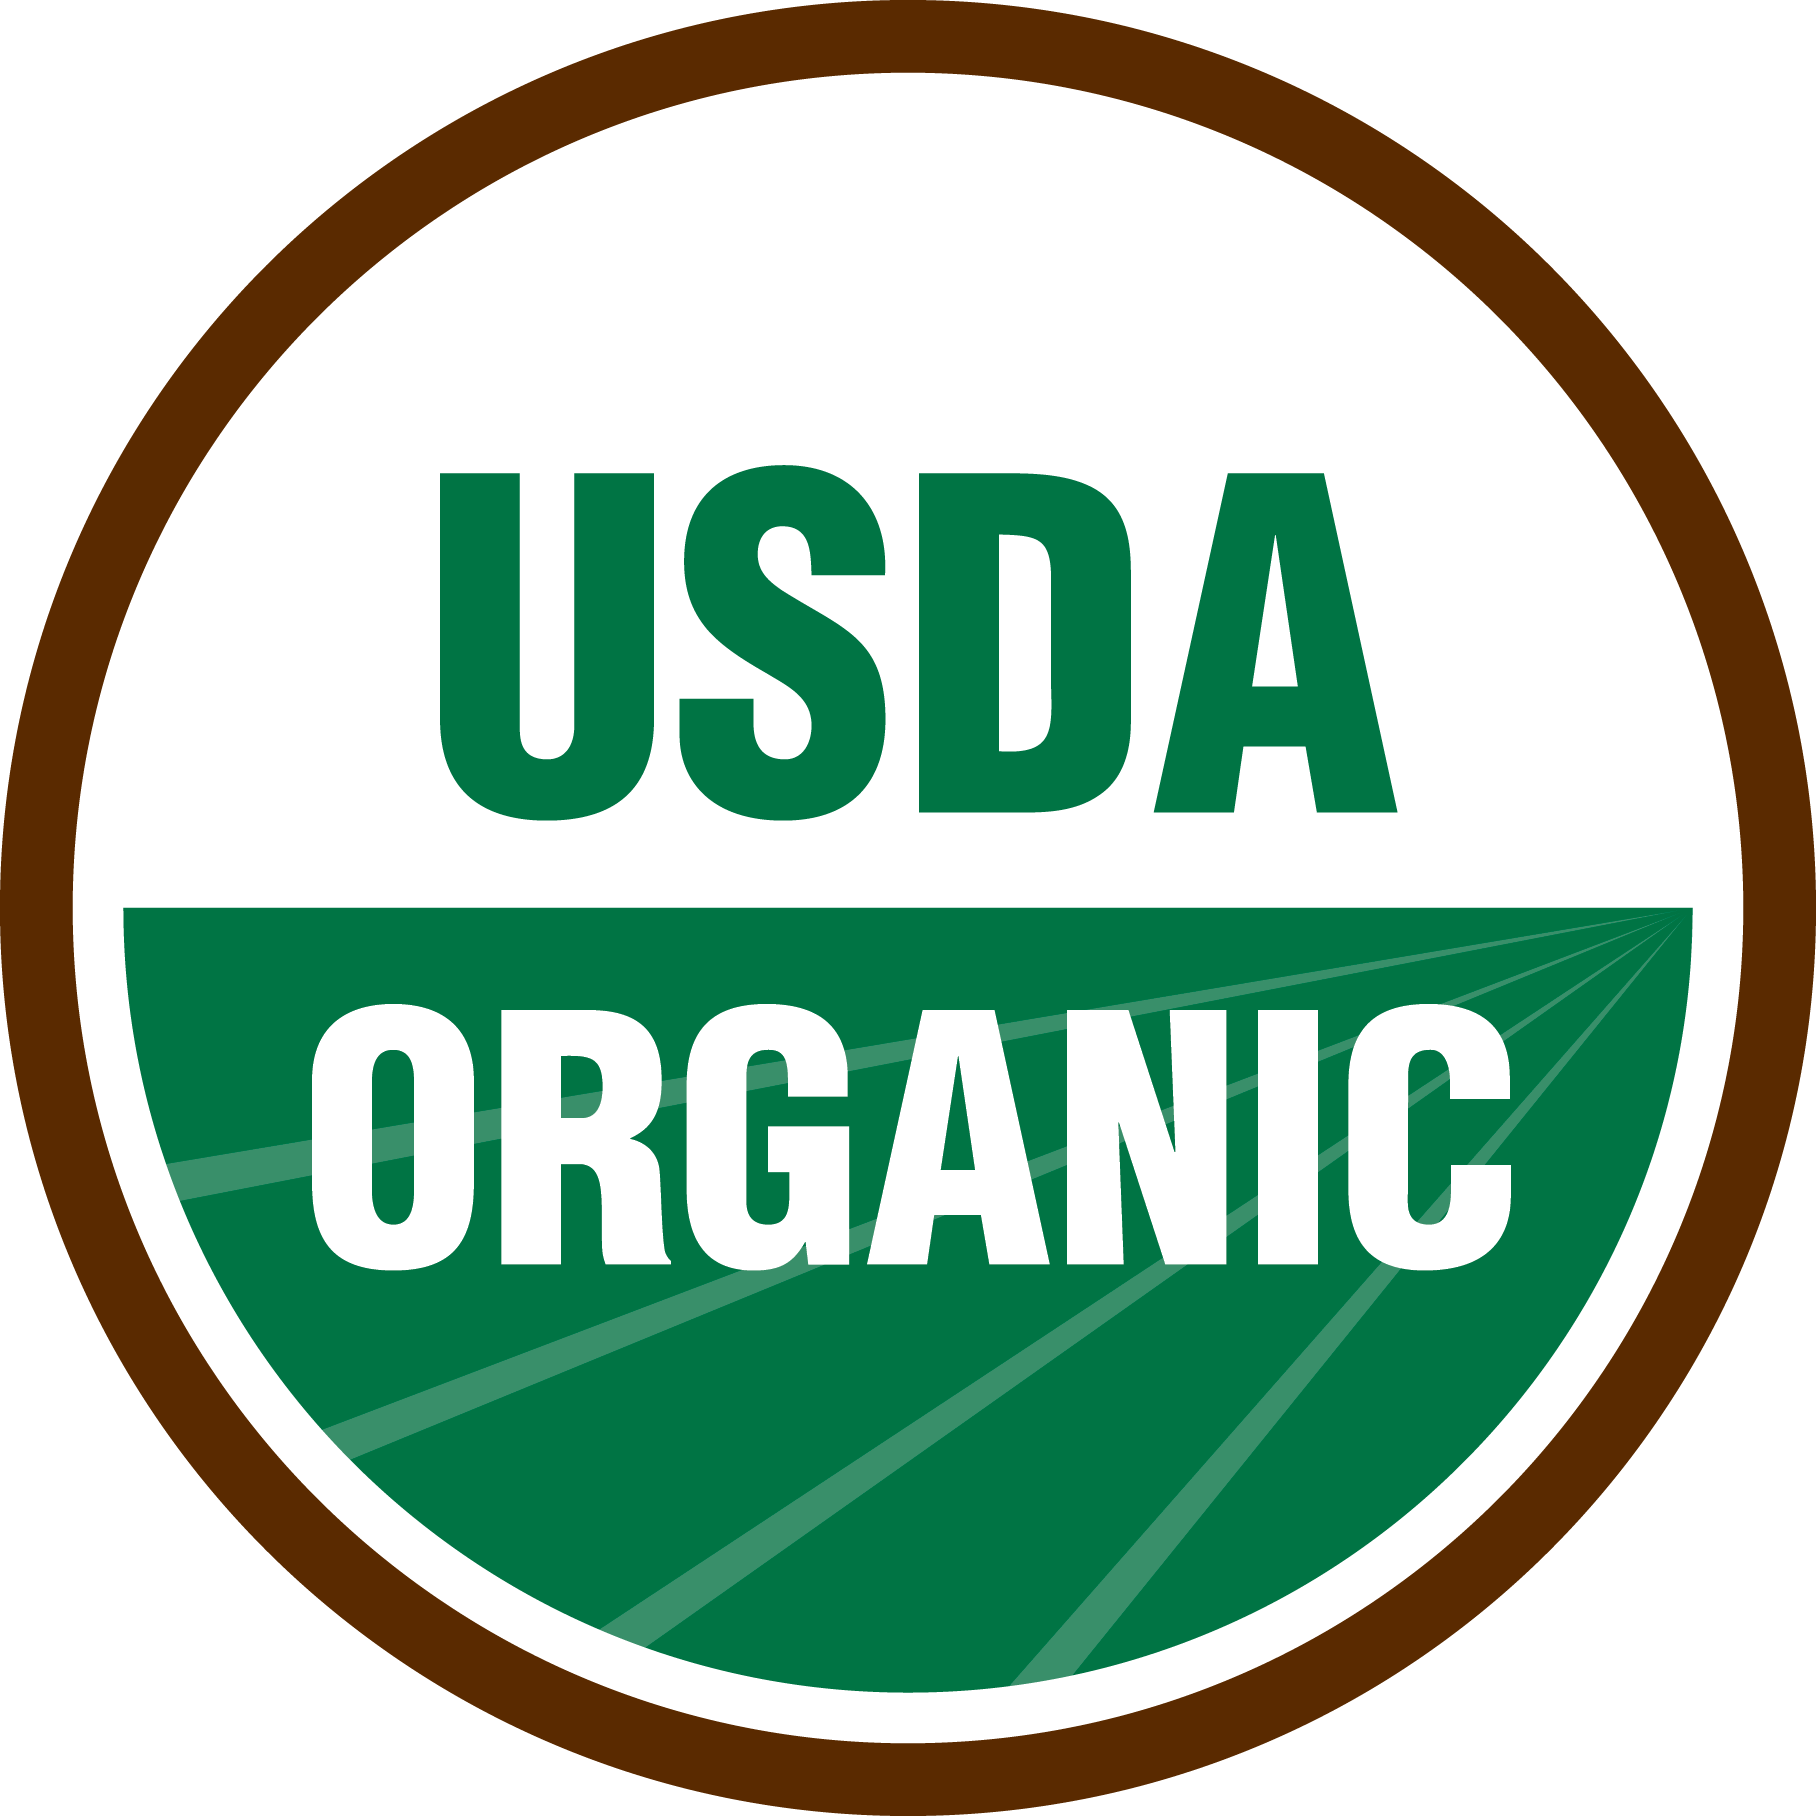 USDA Logo - The Organic Seal. Agricultural Marketing Service